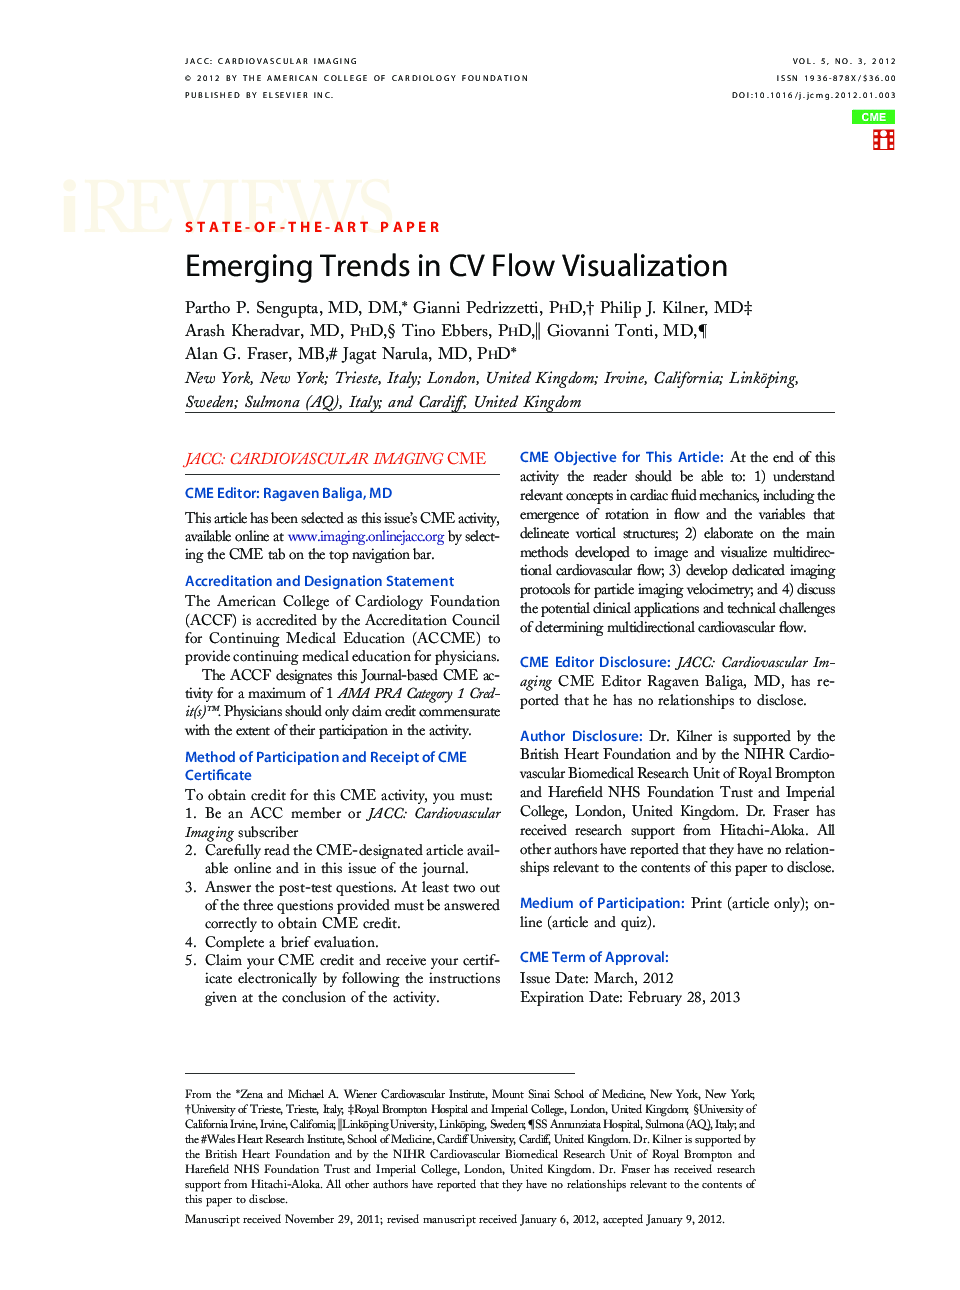 Emerging Trends in CV Flow Visualization 